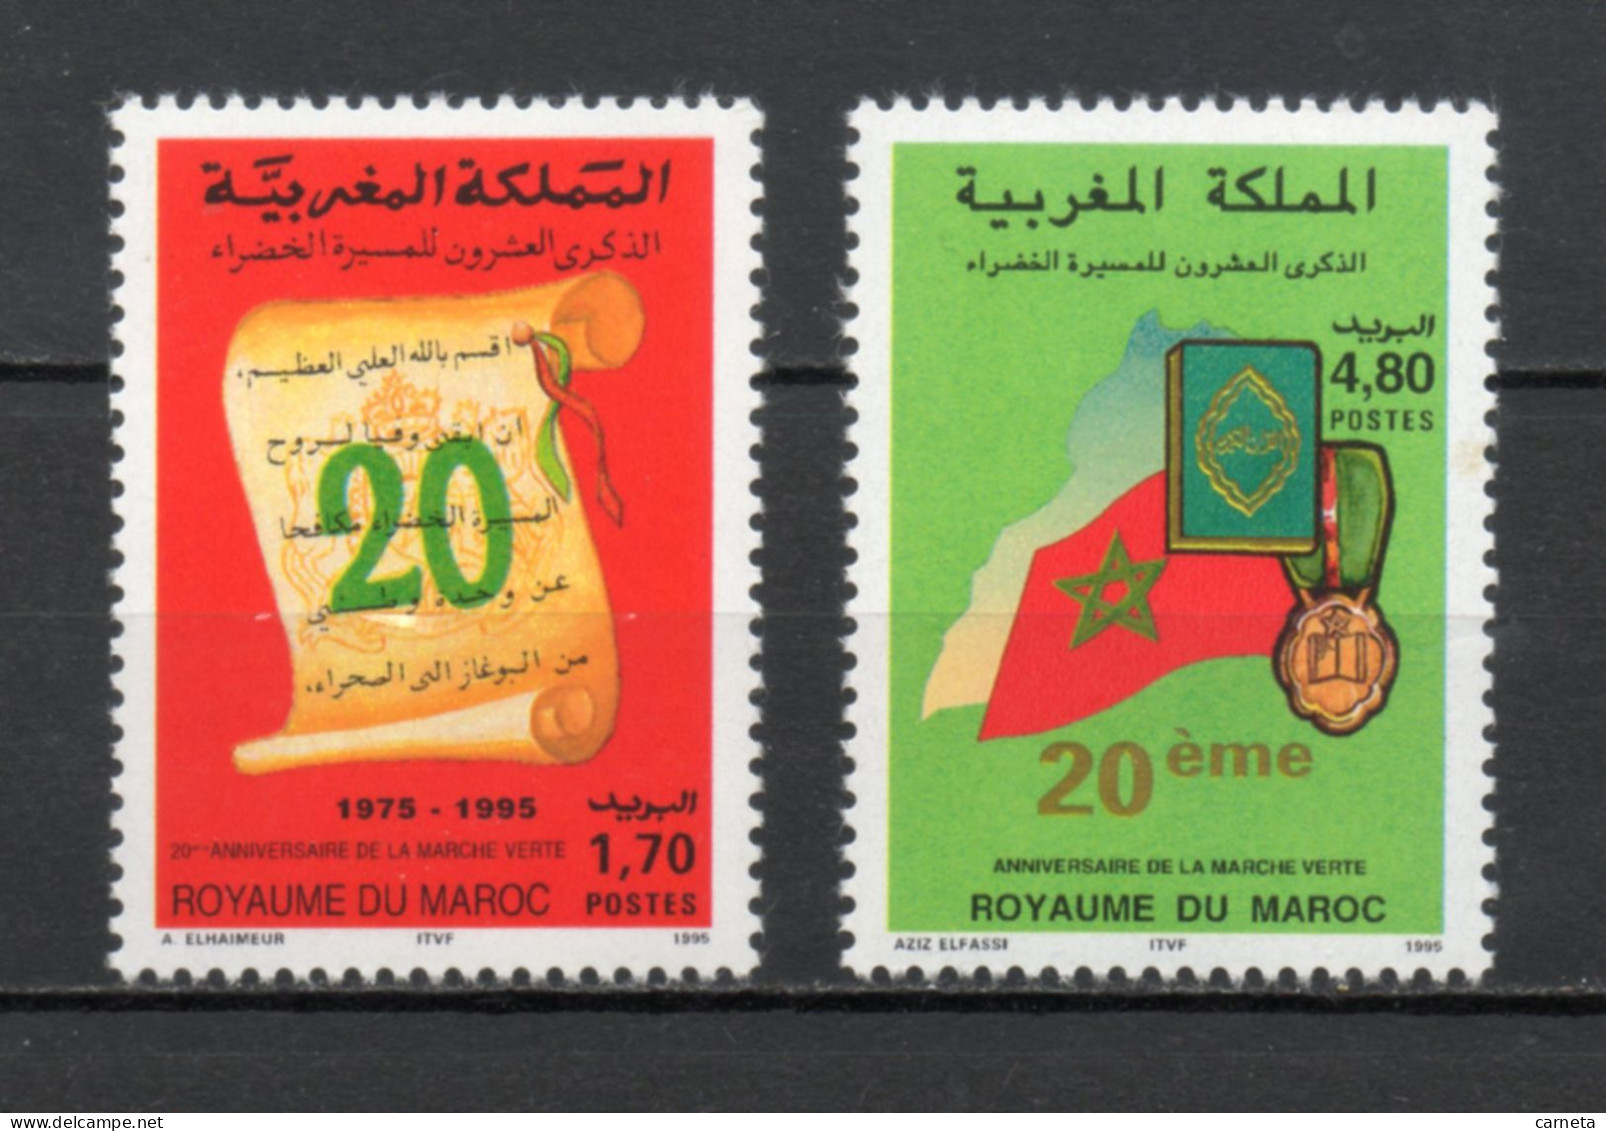 MAROC N°  1184 + 1185    NEUFS SANS CHARNIERE  COTE 2.50€    MARCHE VERTE - Morocco (1956-...)